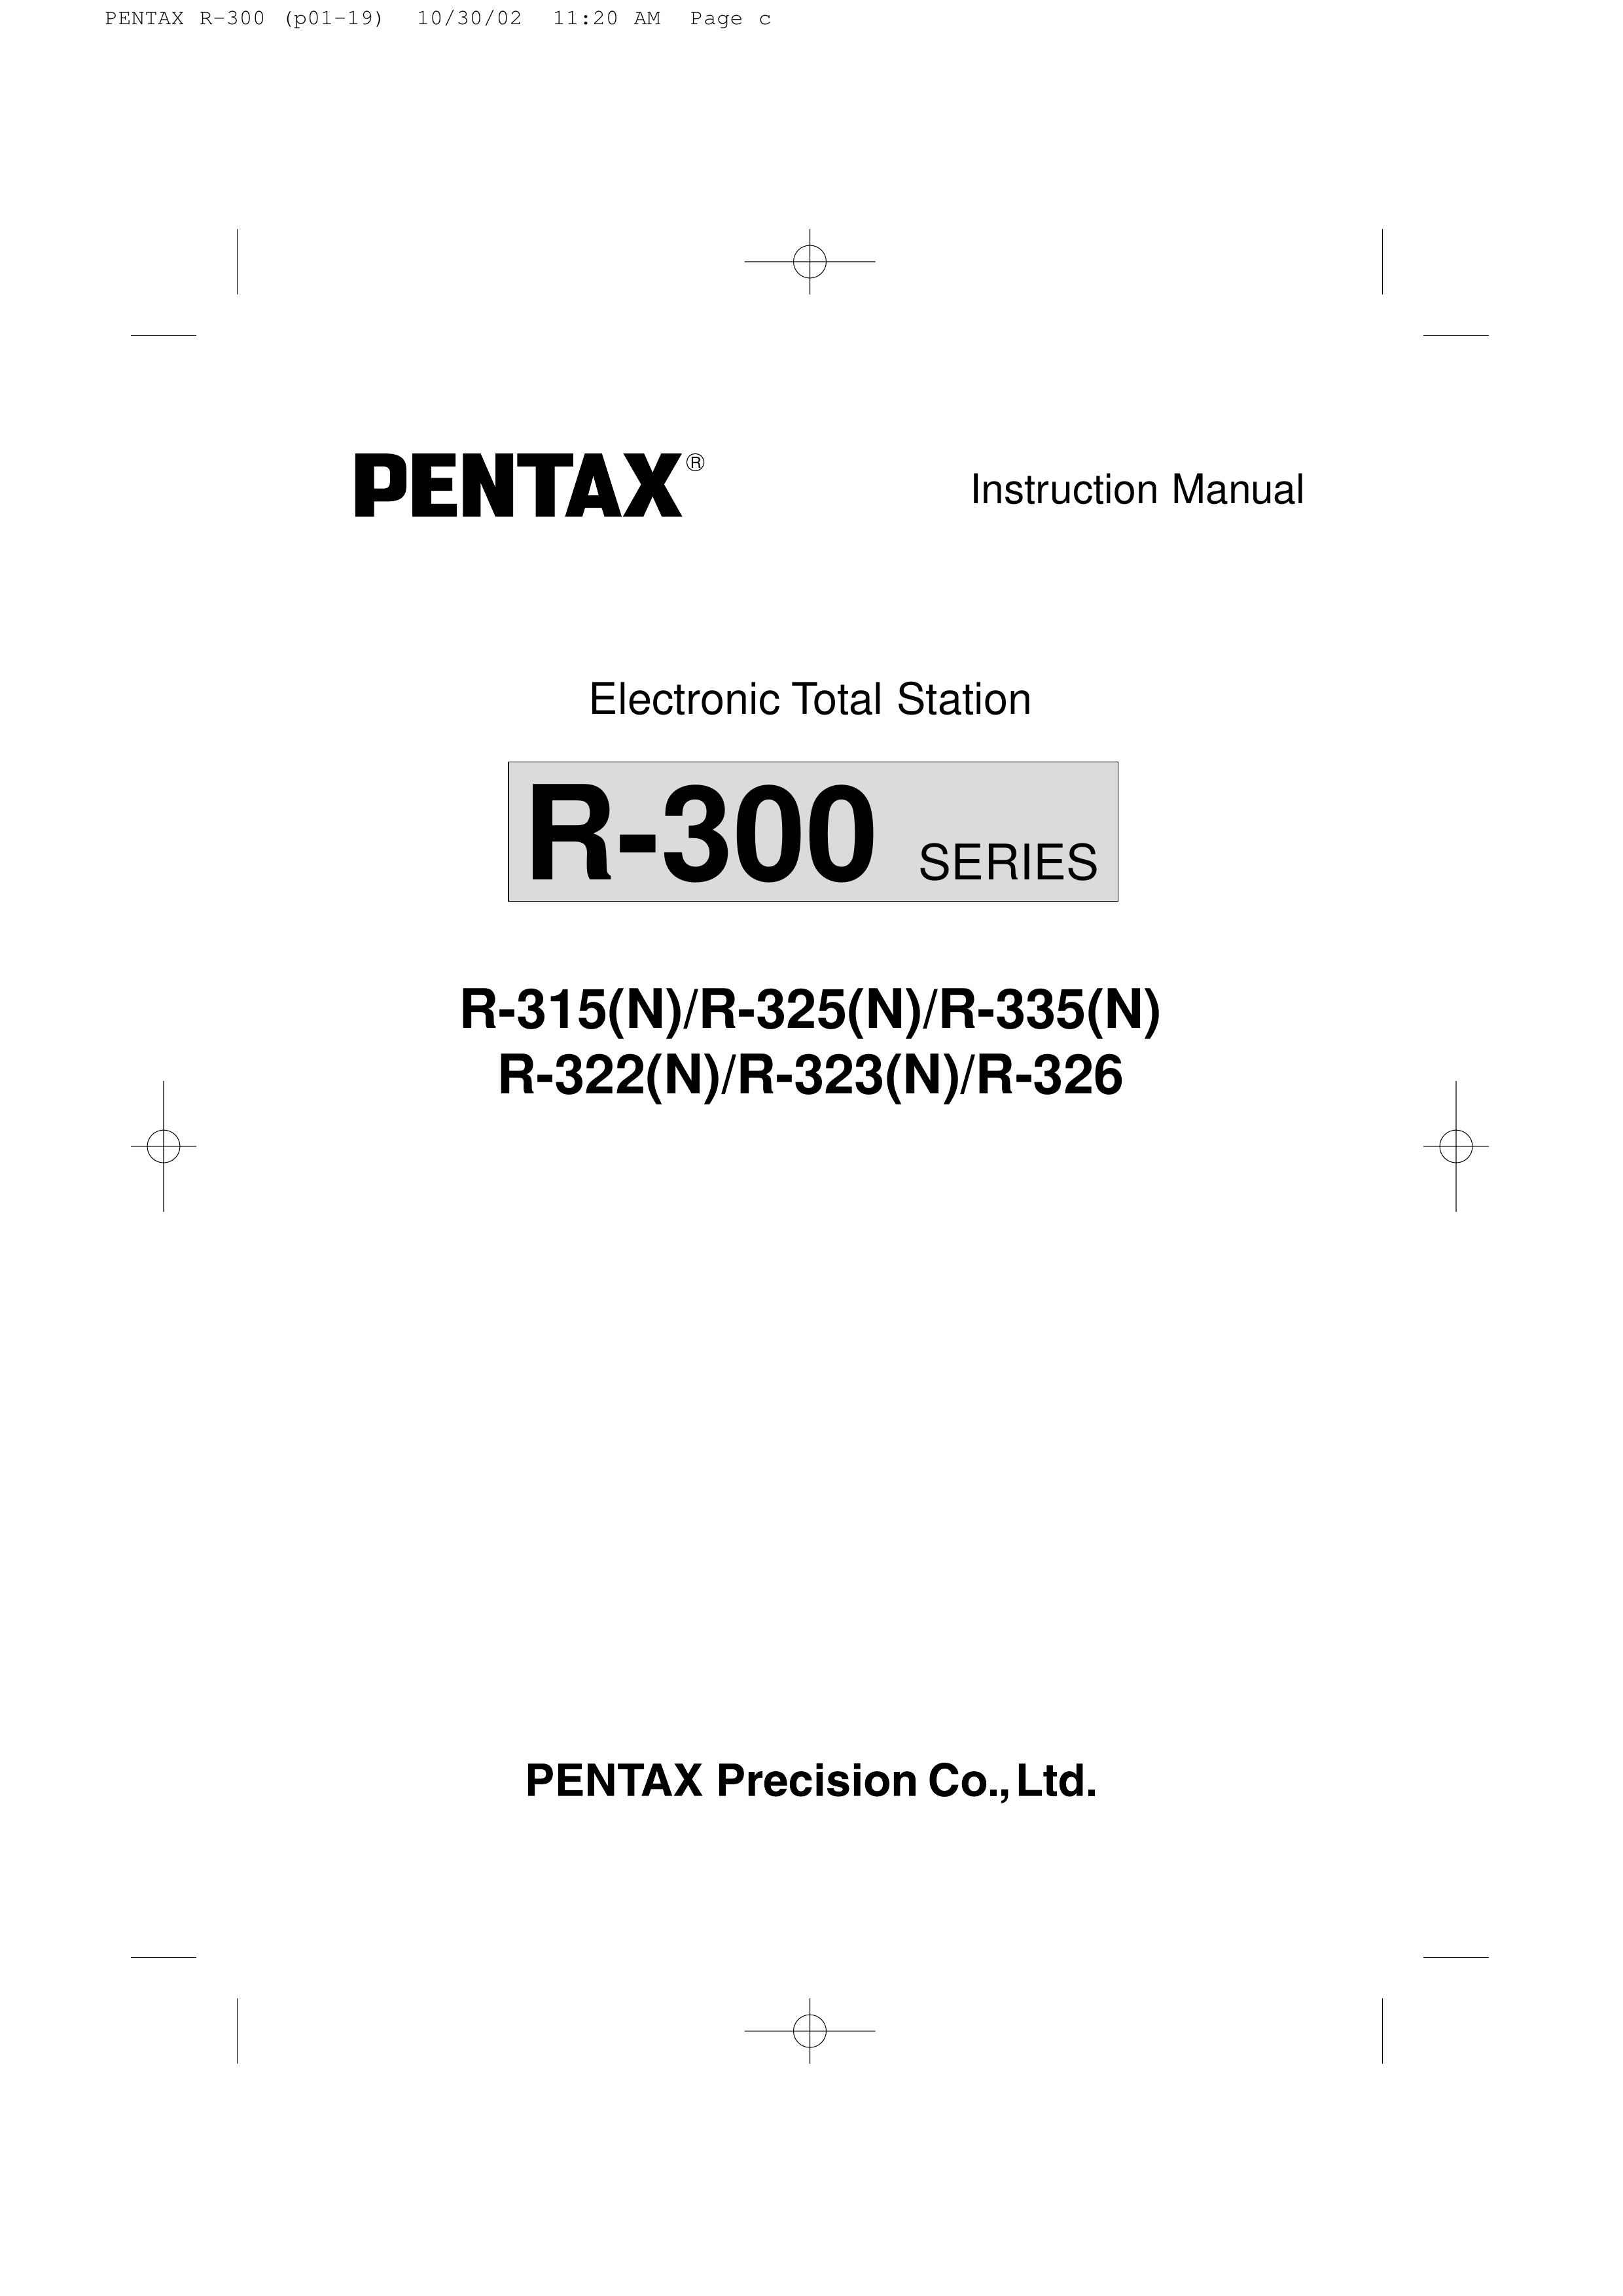 Pentax R-325(N) Telescope User Manual